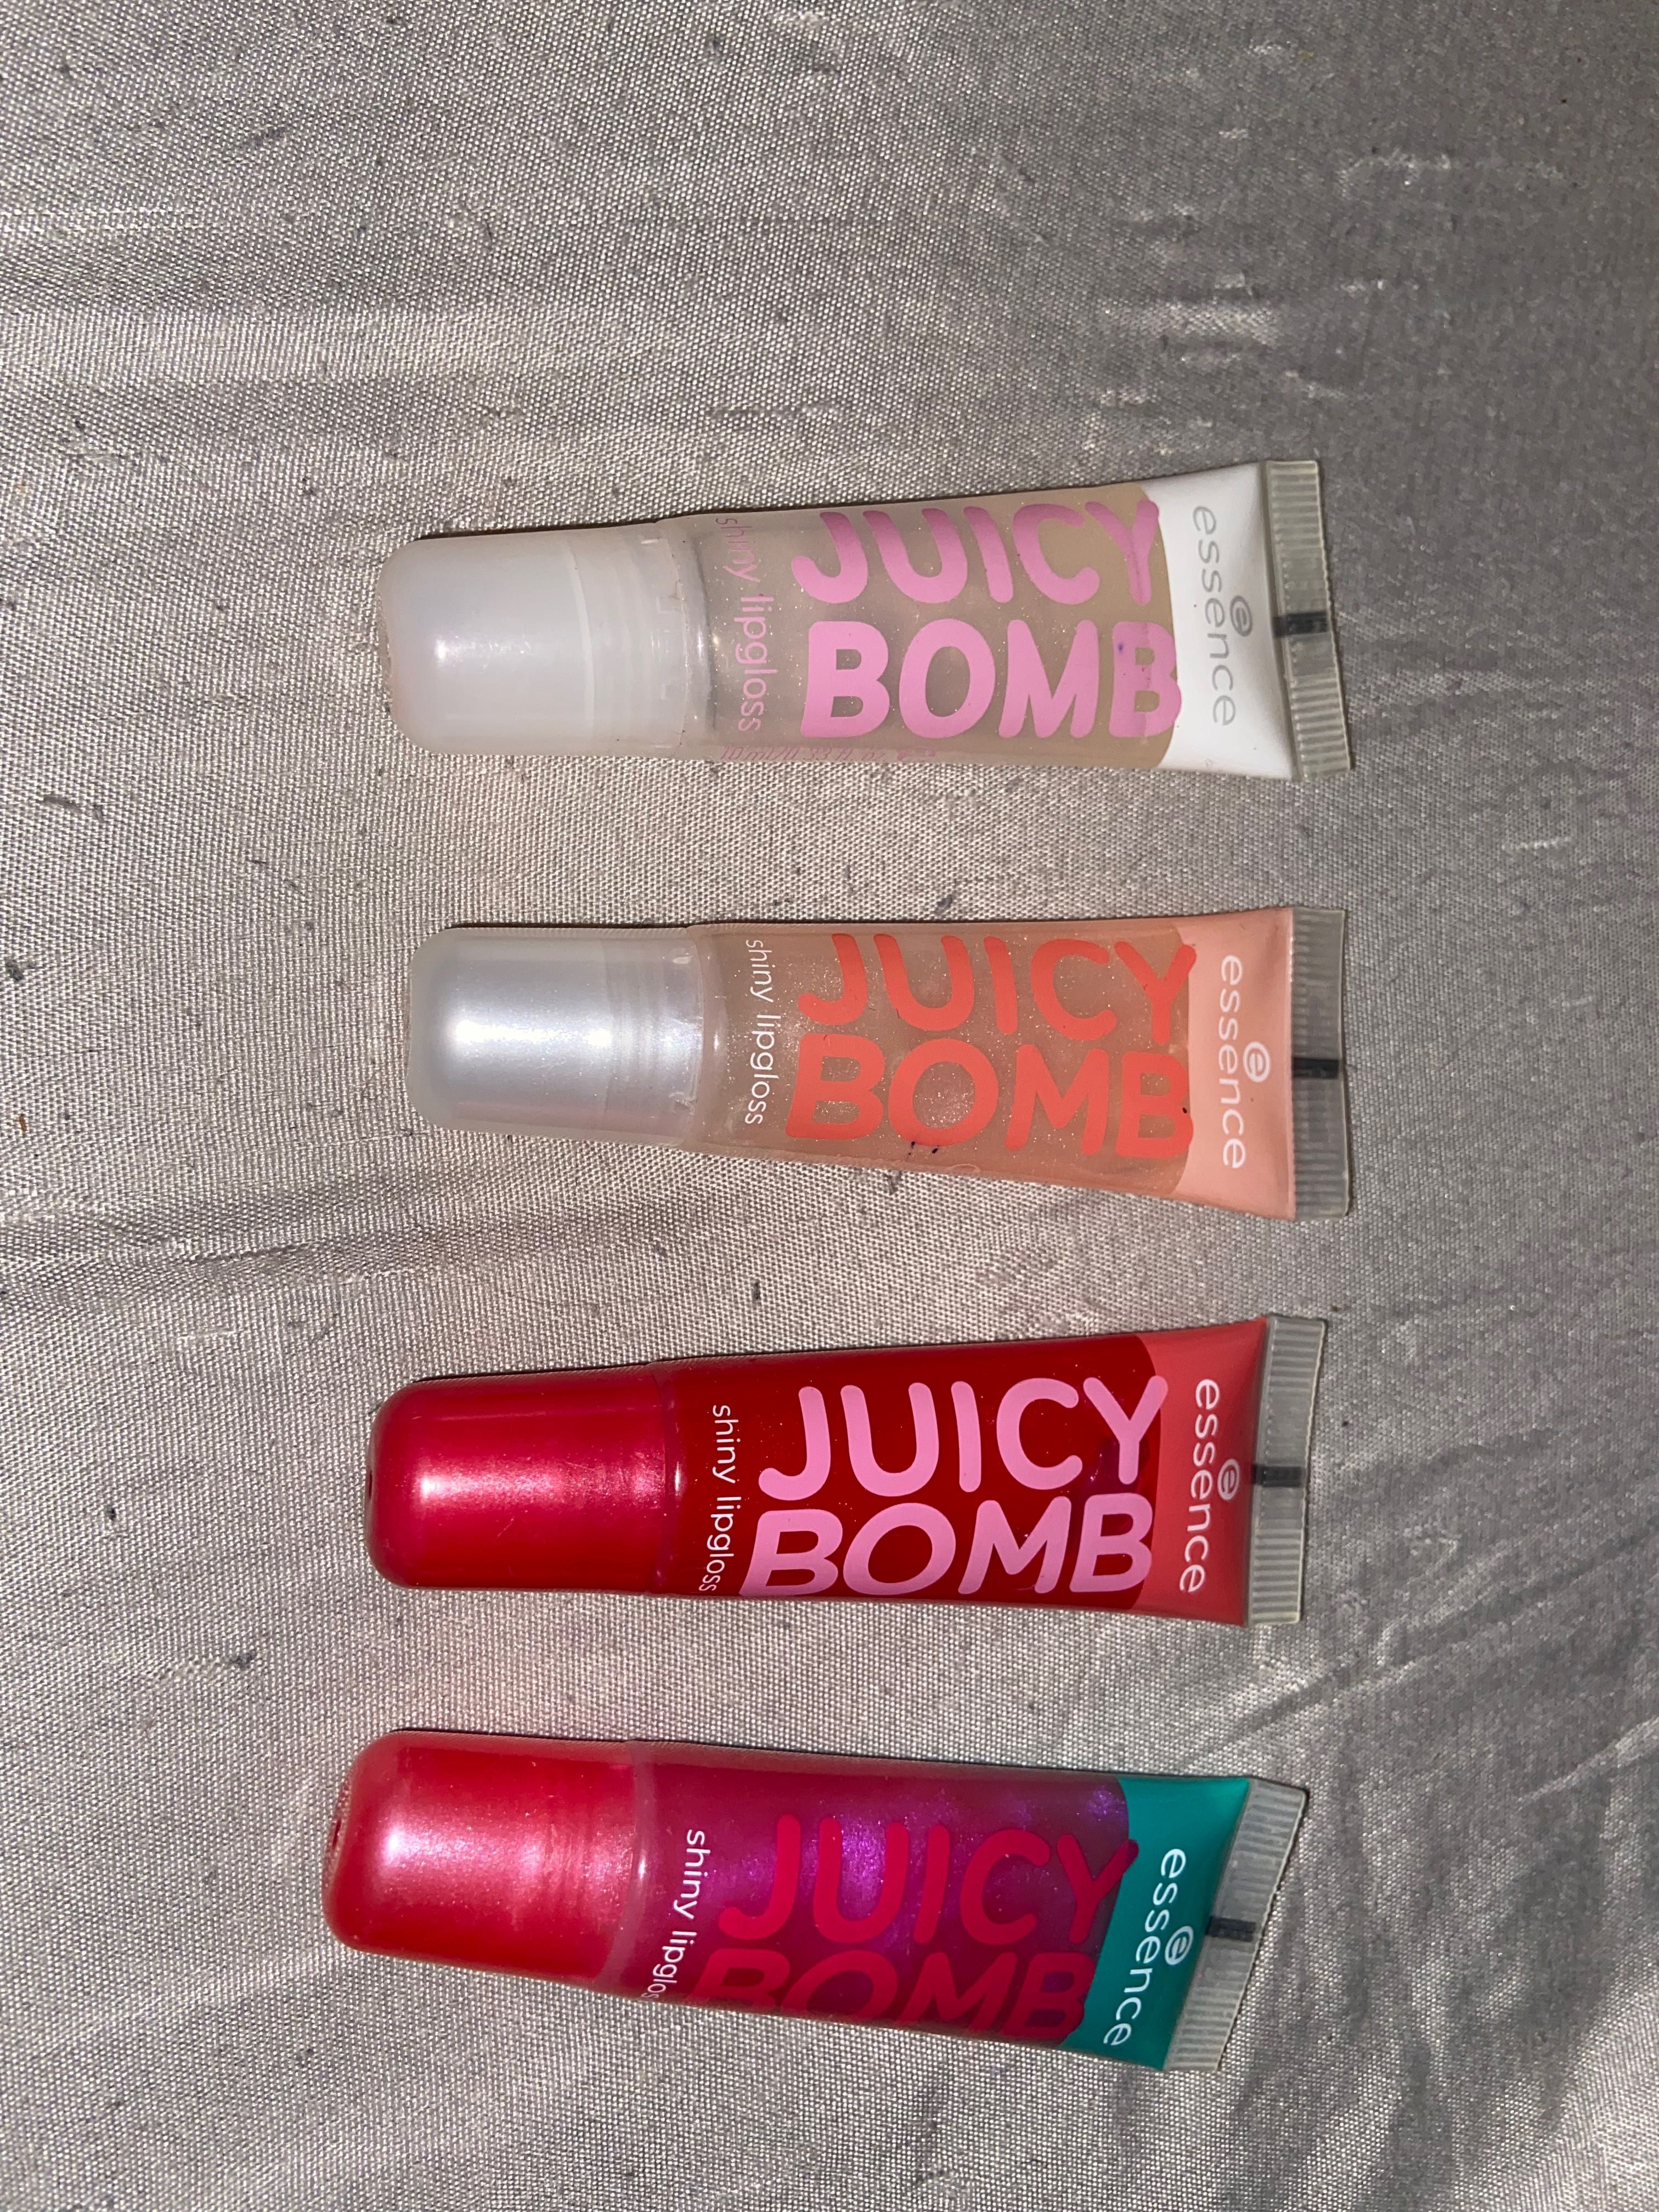 Juicy bomb essence